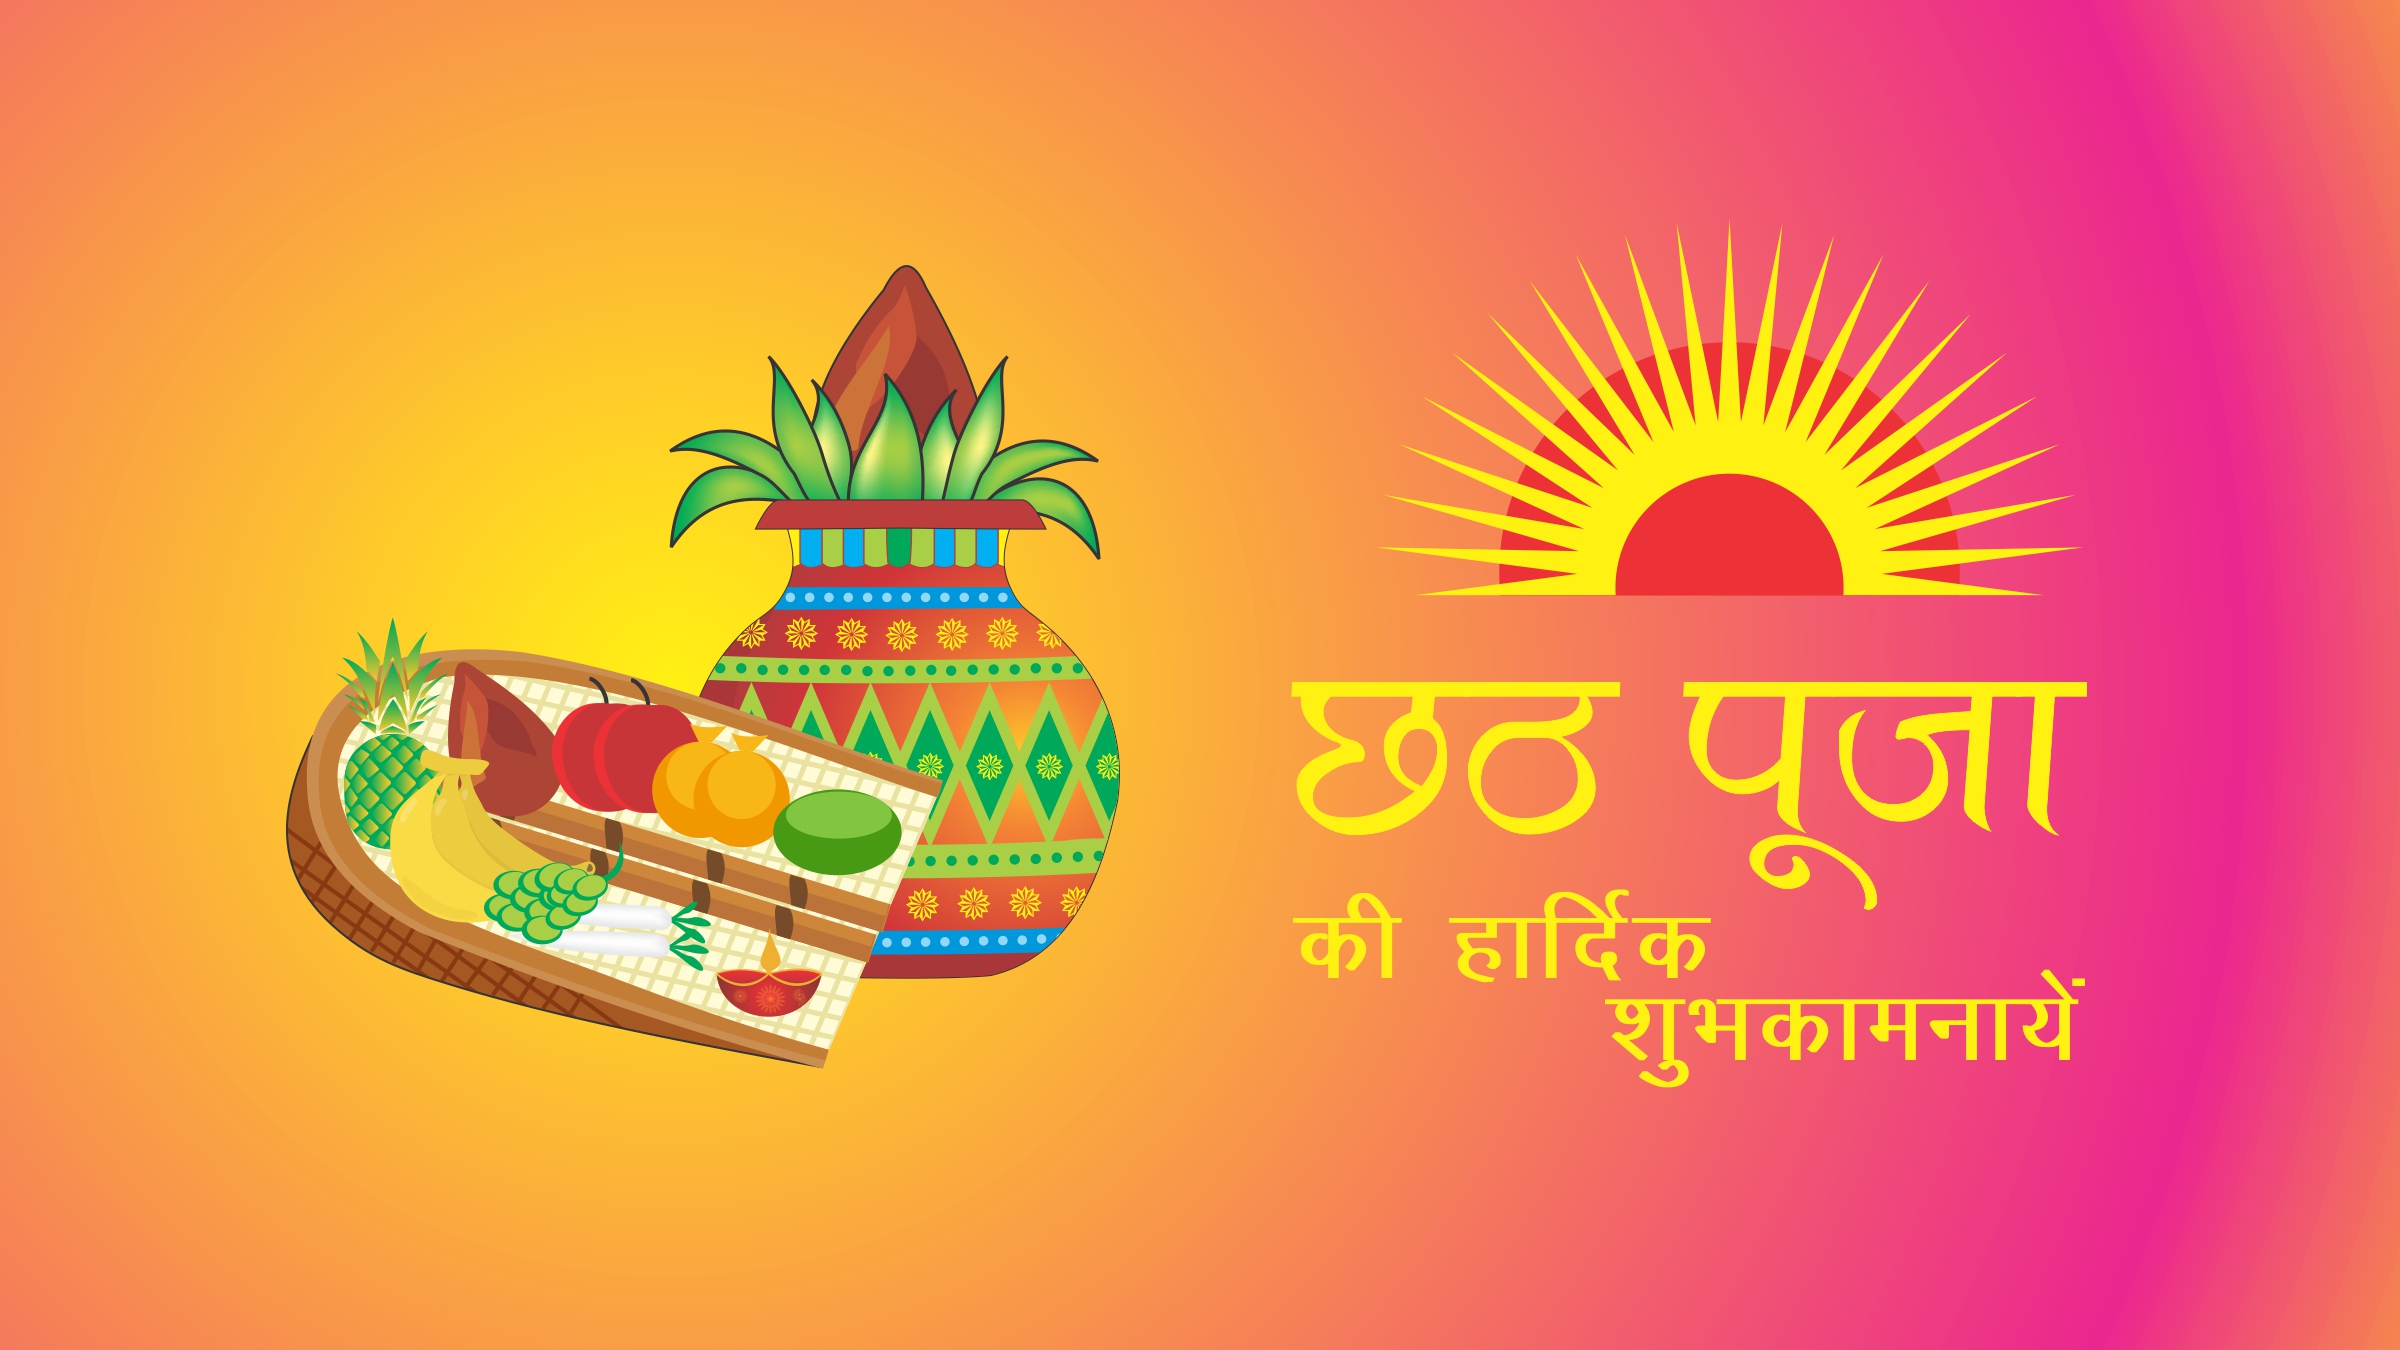 Happy chhath mahaparv, chhathpuja free vector, photo & background download  - Graphics Pic